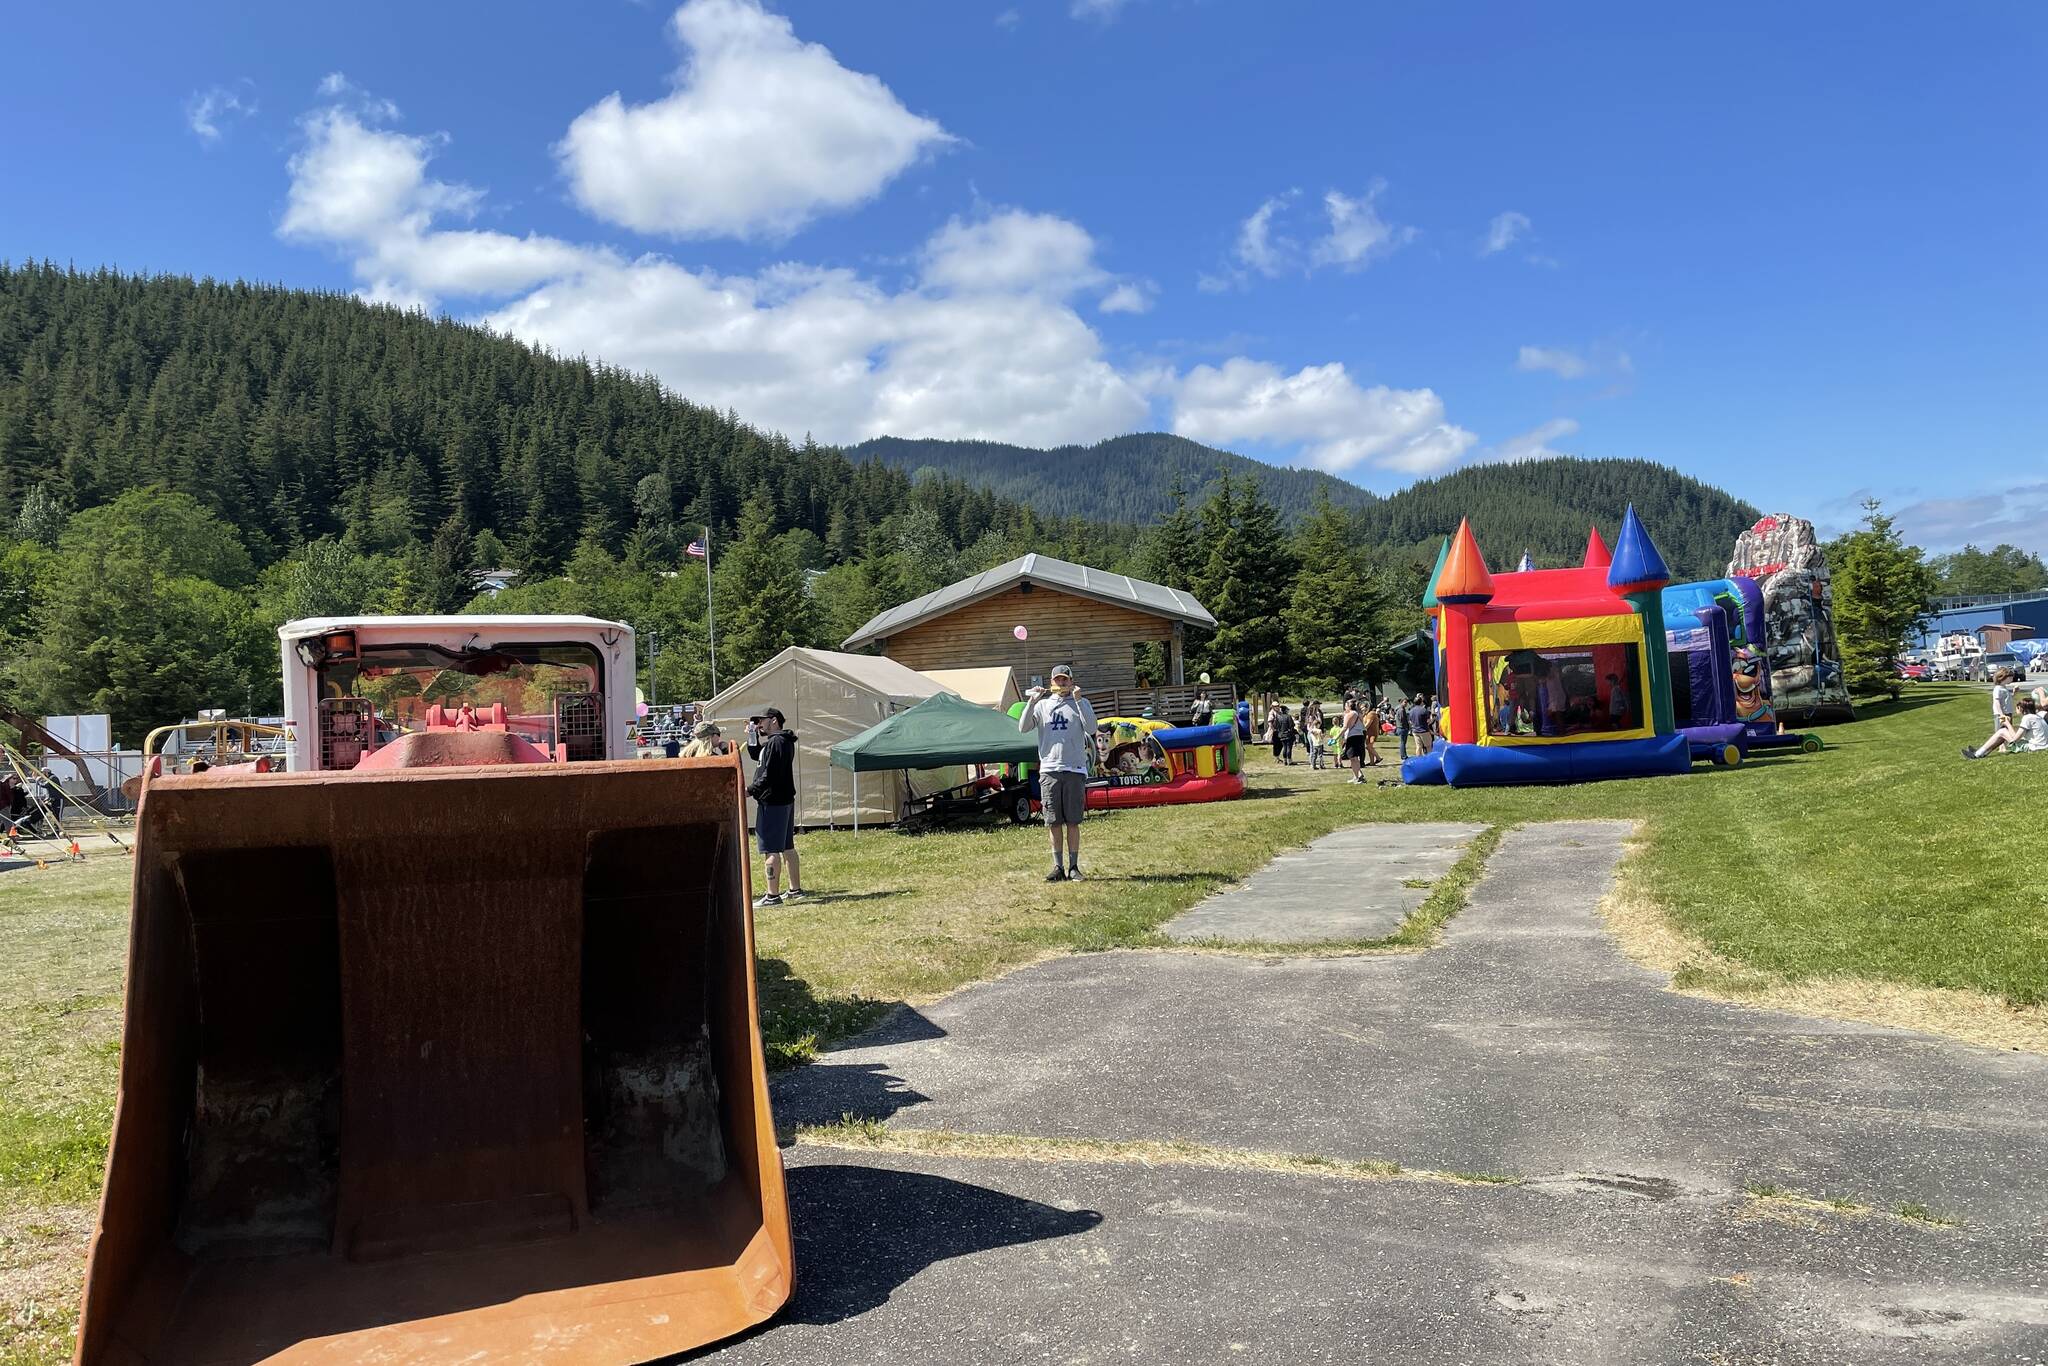 Mining equipment. children’s distractions and more were part of Juneau Gold Rush Days in Savikko Park on June 18, 2022. (Michael S. Lockett / Juneau Empire)